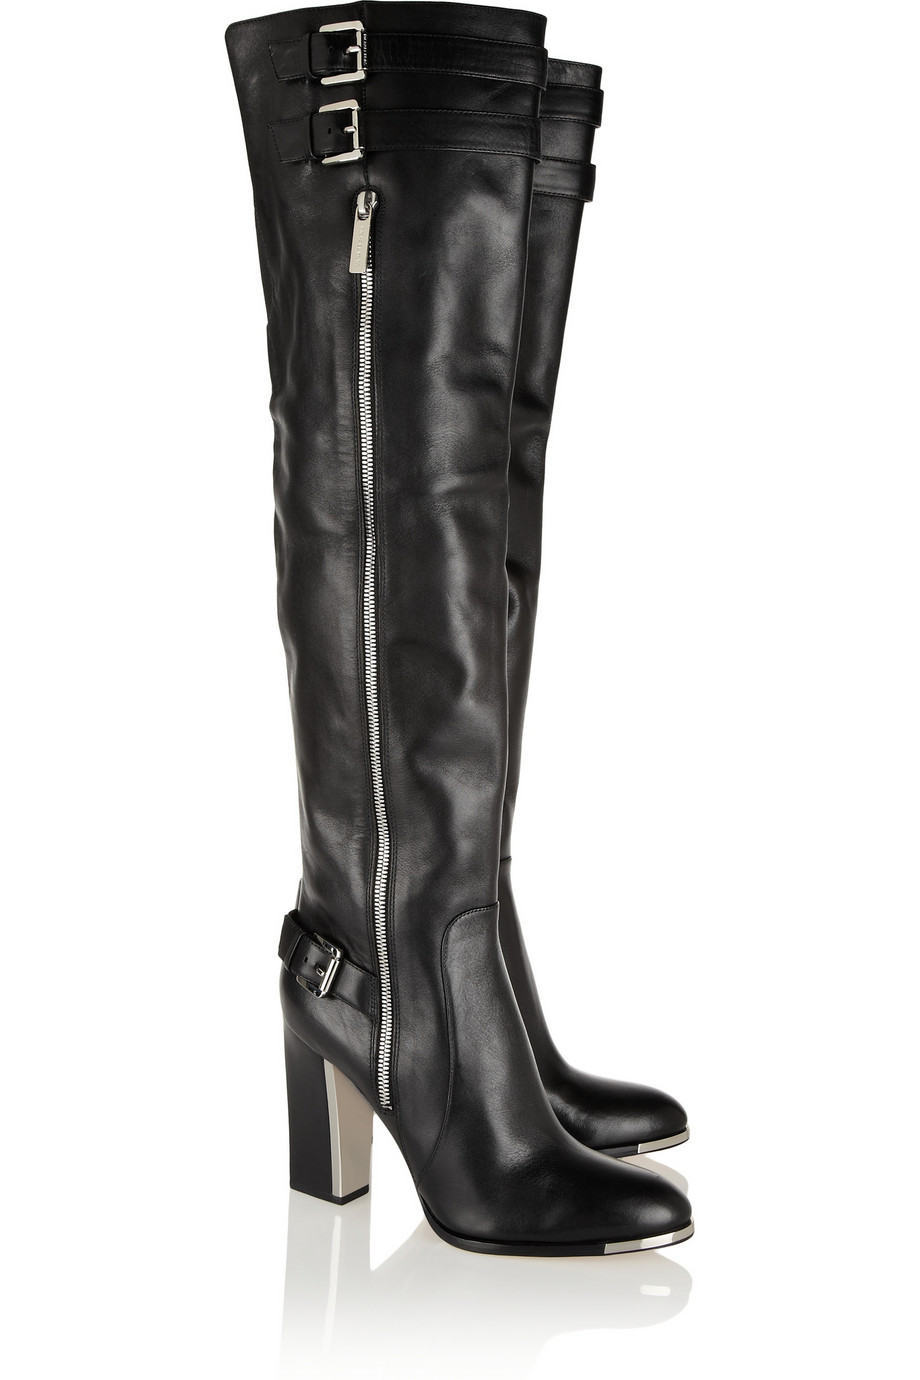 Michael kors Jayla Leather Overtheknee Boots in Black | Lyst